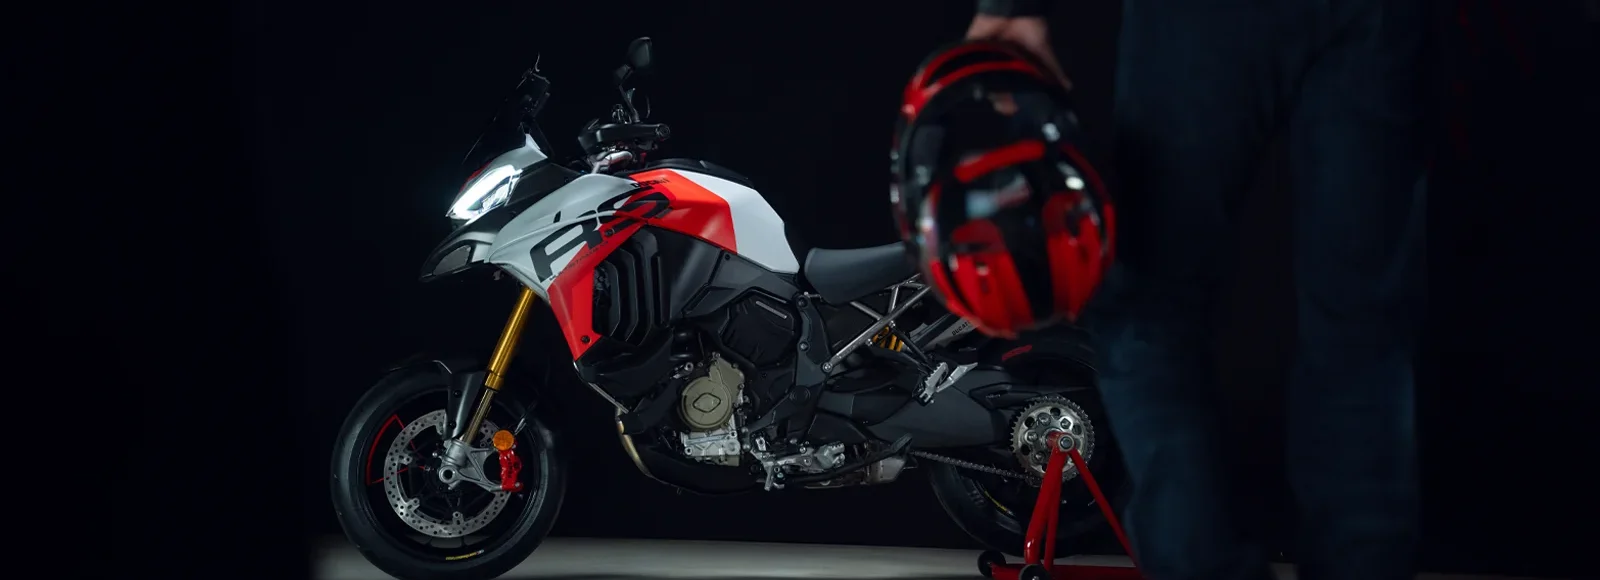 Ducati-Multistrada-RS-DWP24-Overview-hero-short-1600x1000-02